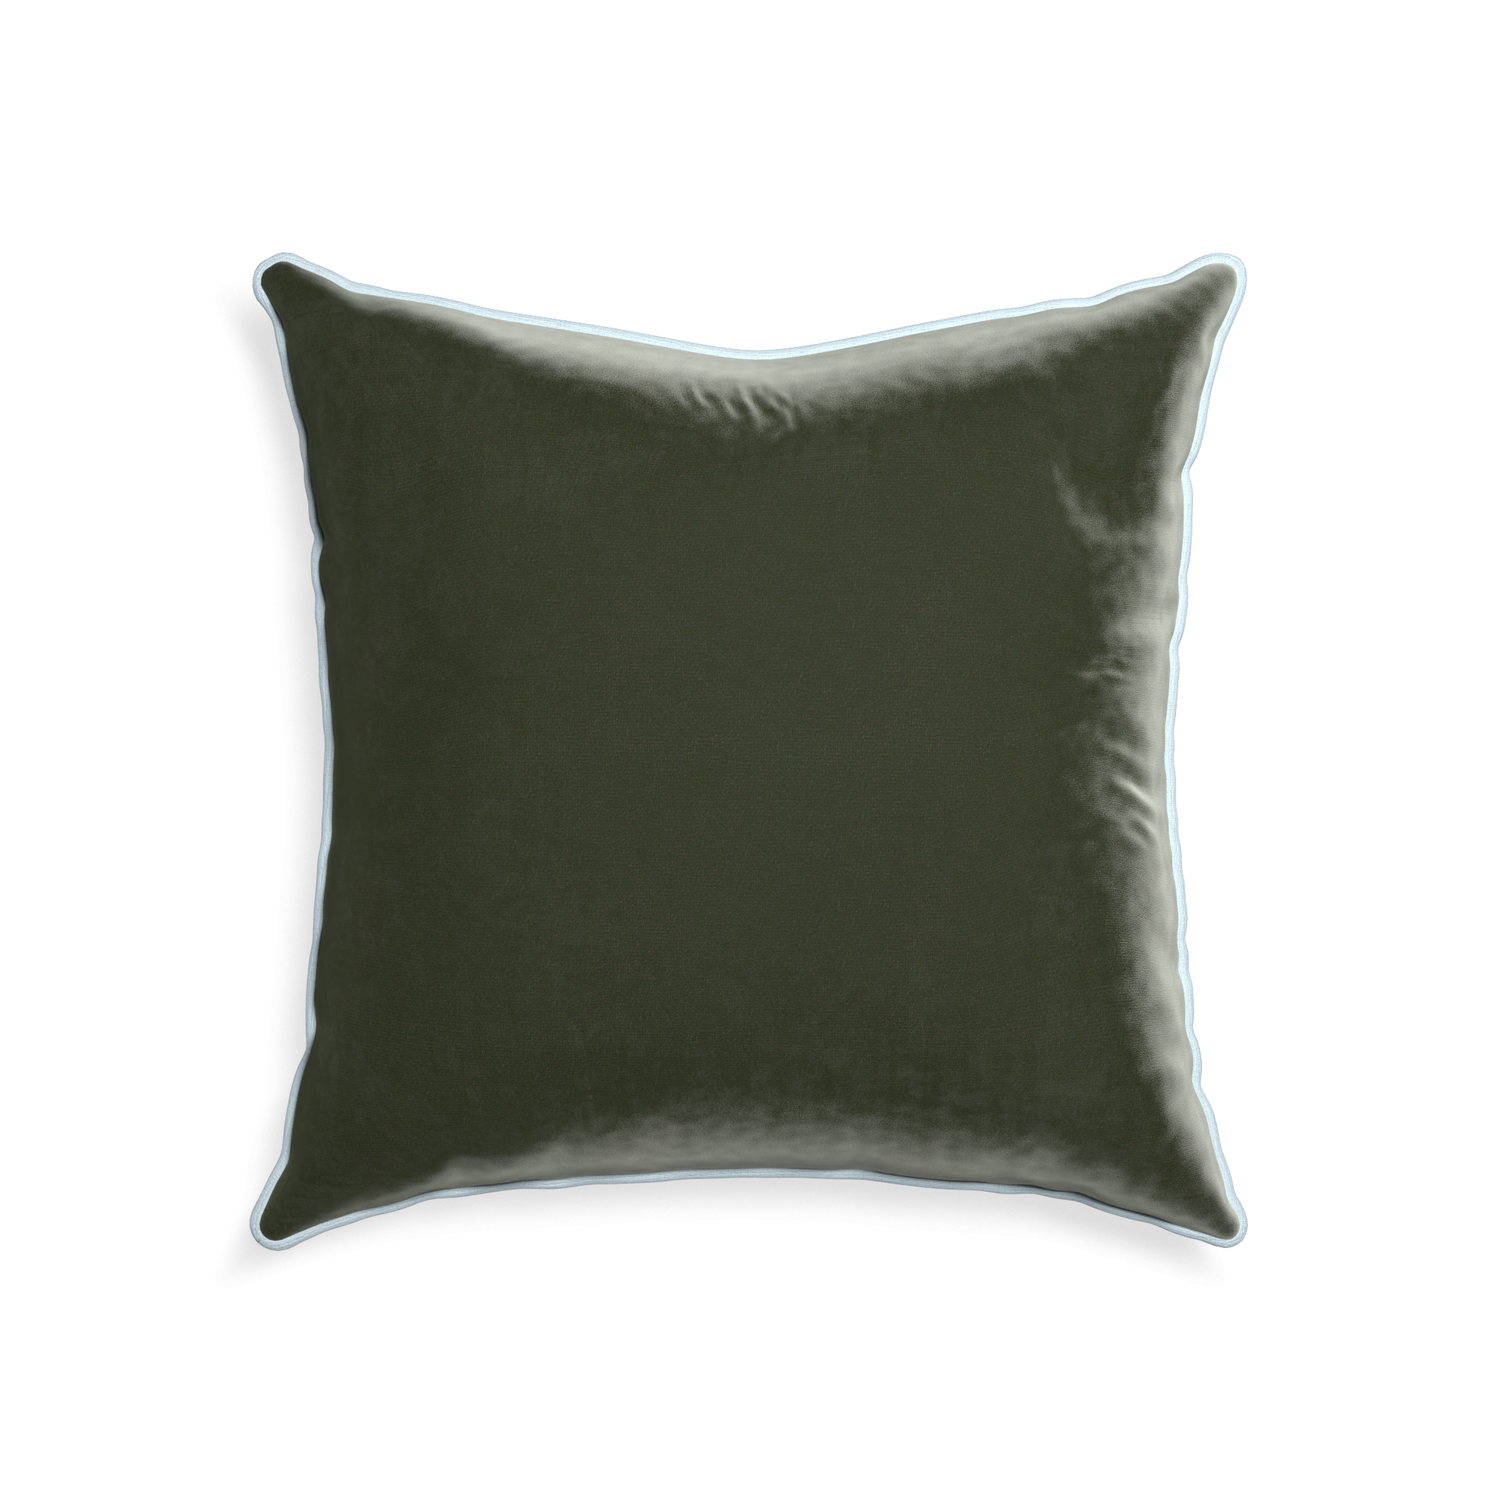 square fern green velvet pillow with light blue piping